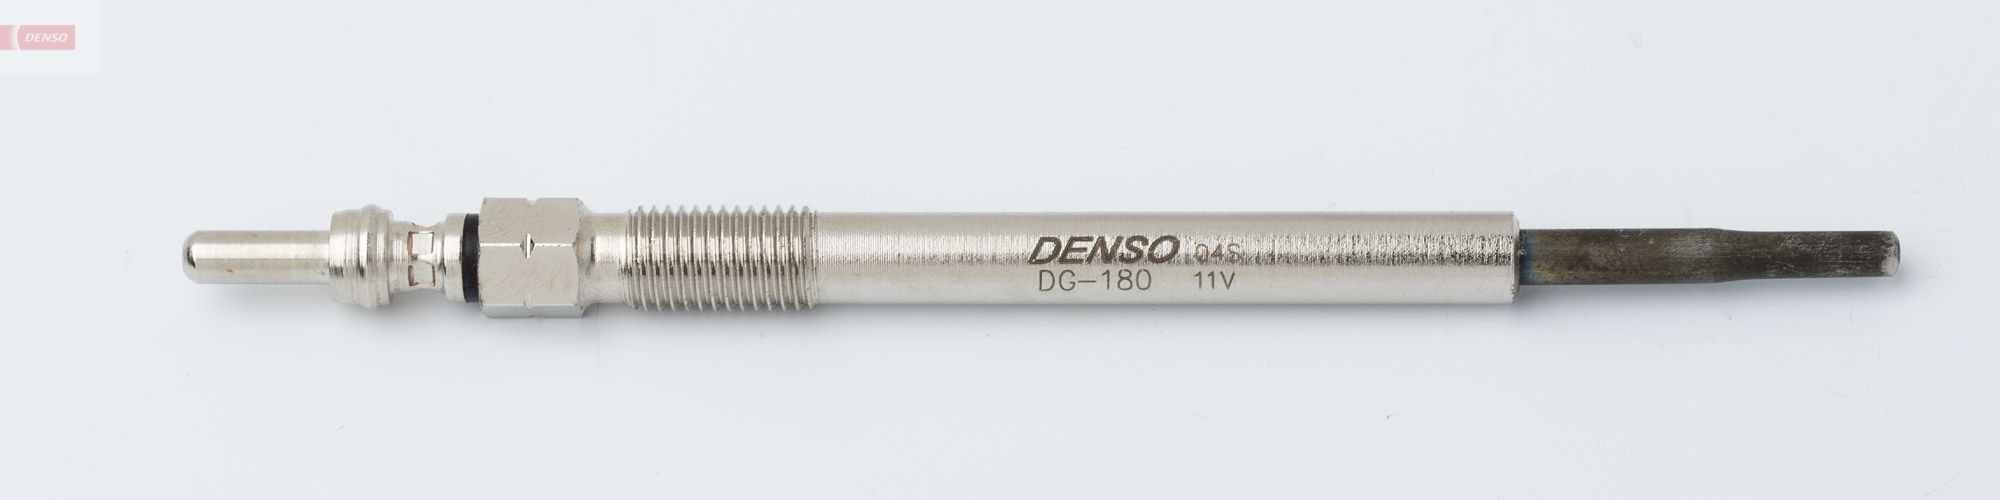 DENSO Glow plug DG-180 Mazda 2 2017